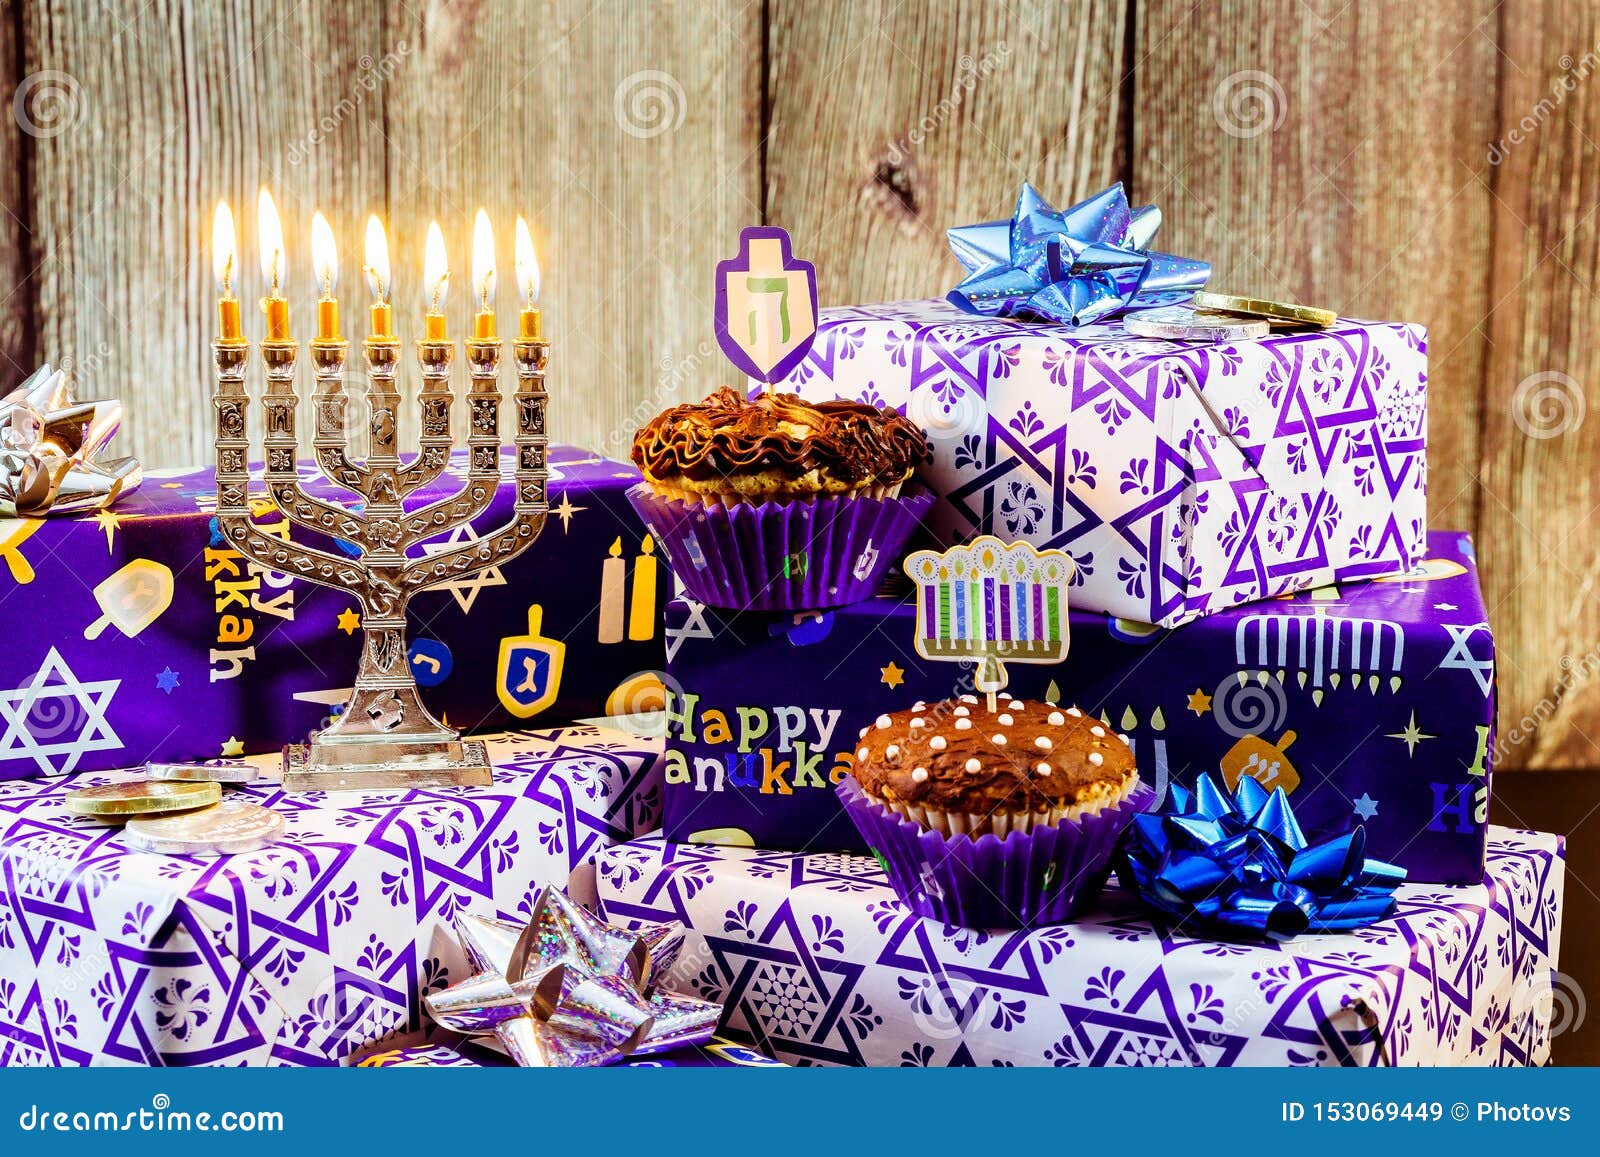 jewish holiday hanukkah still life composed of s the chanukah festival